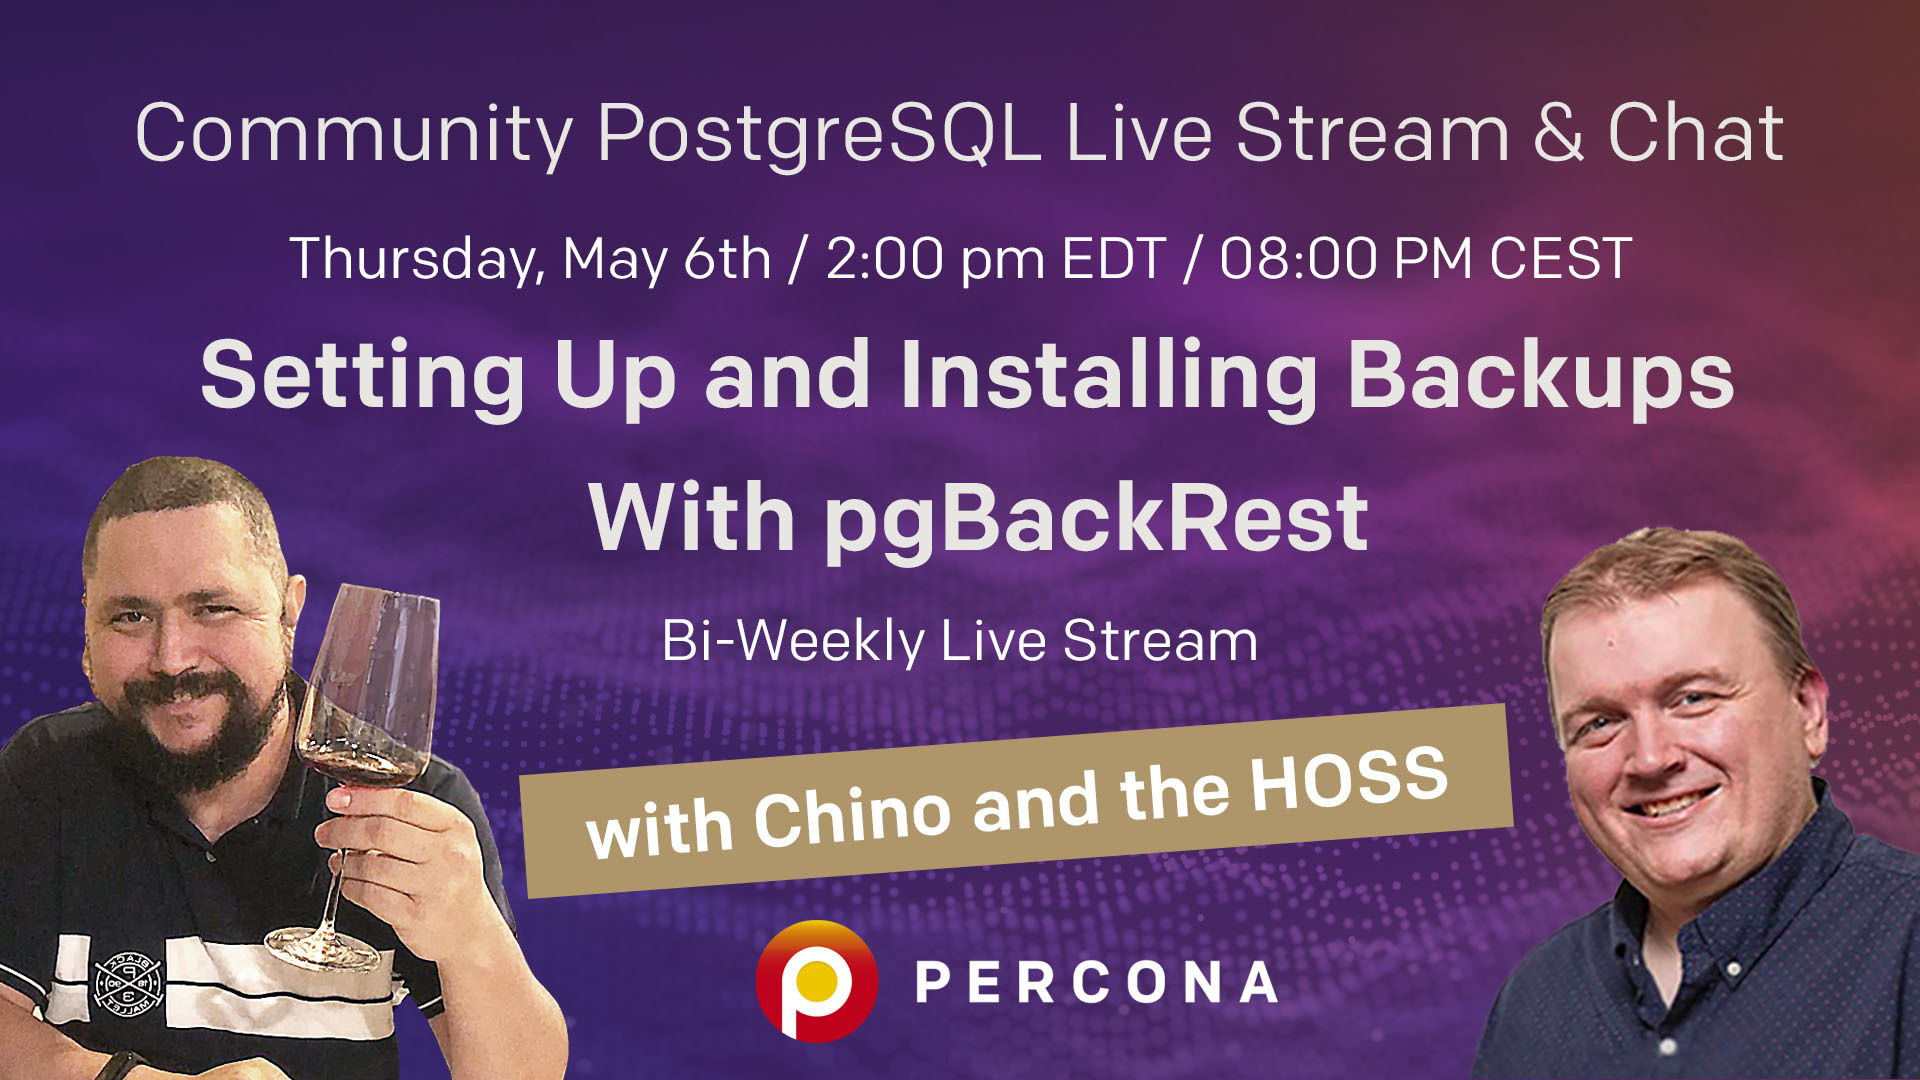 Percona Community PostgreSQL Live Stream & Chat - May 6th